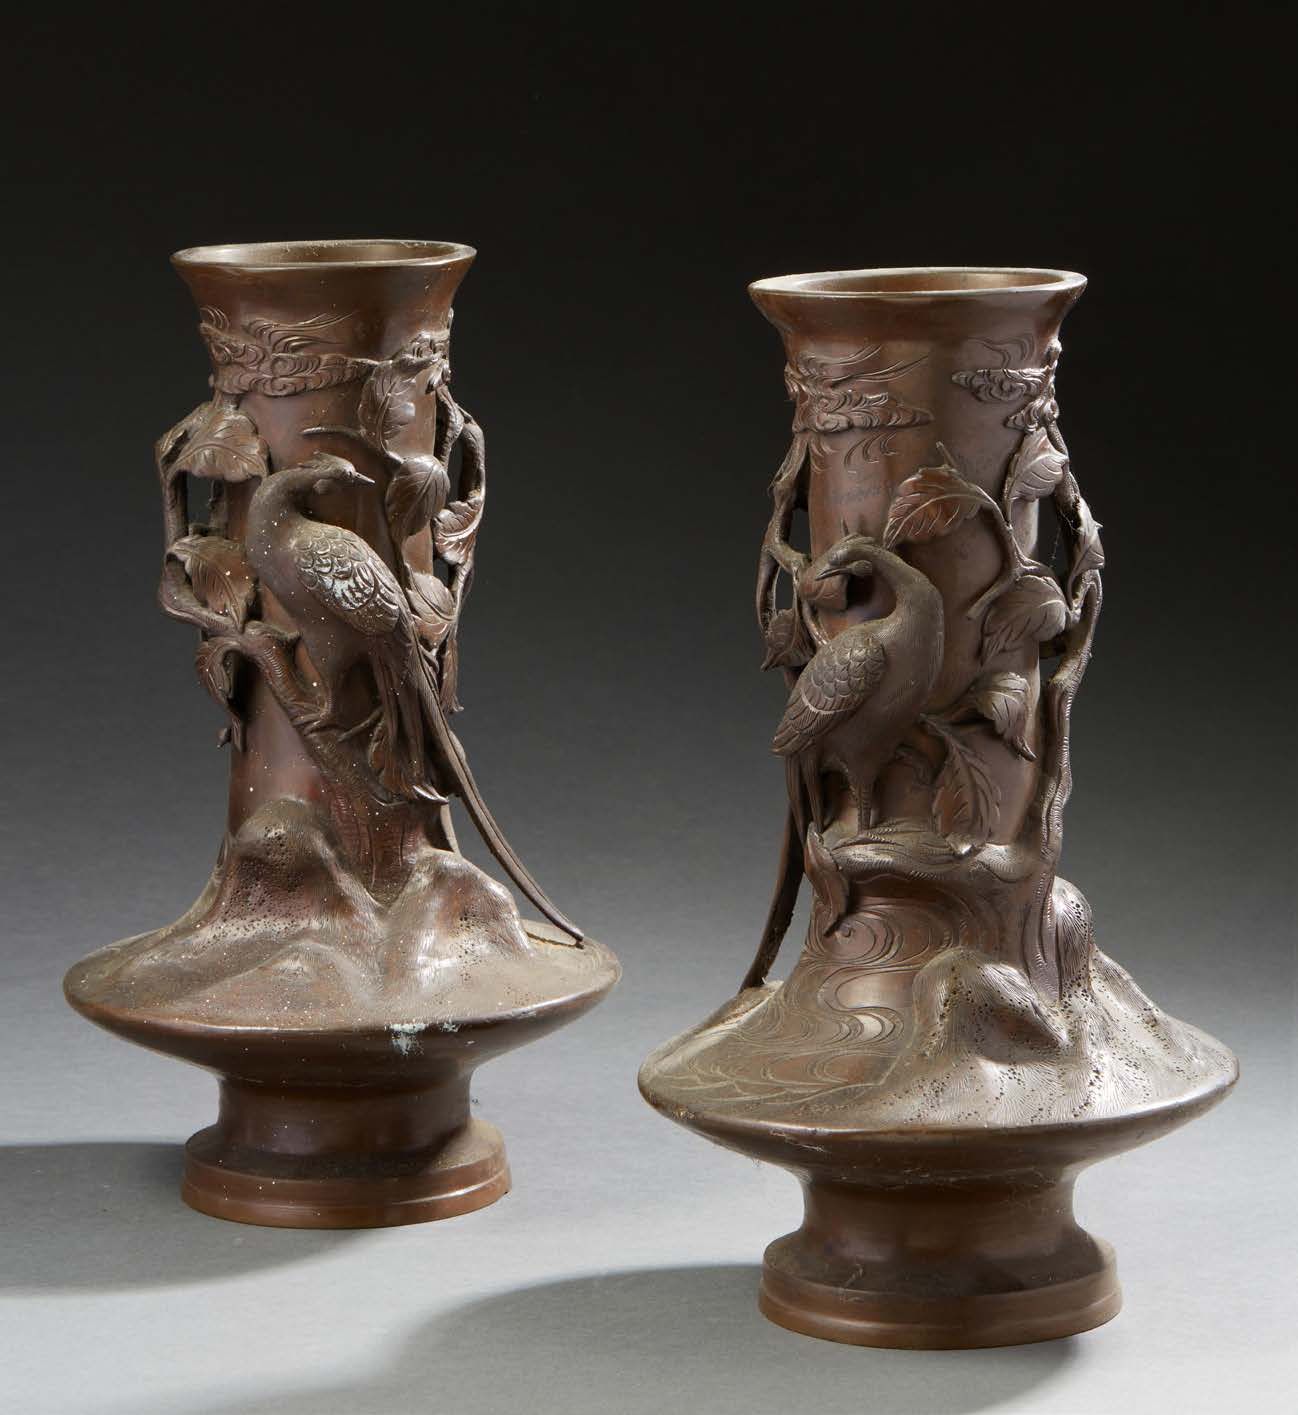 JAPON 一对棕色铜锈的青铜花瓶，用浅浮雕的方式装饰着鸟和叶子 19世纪末，H.31厘米